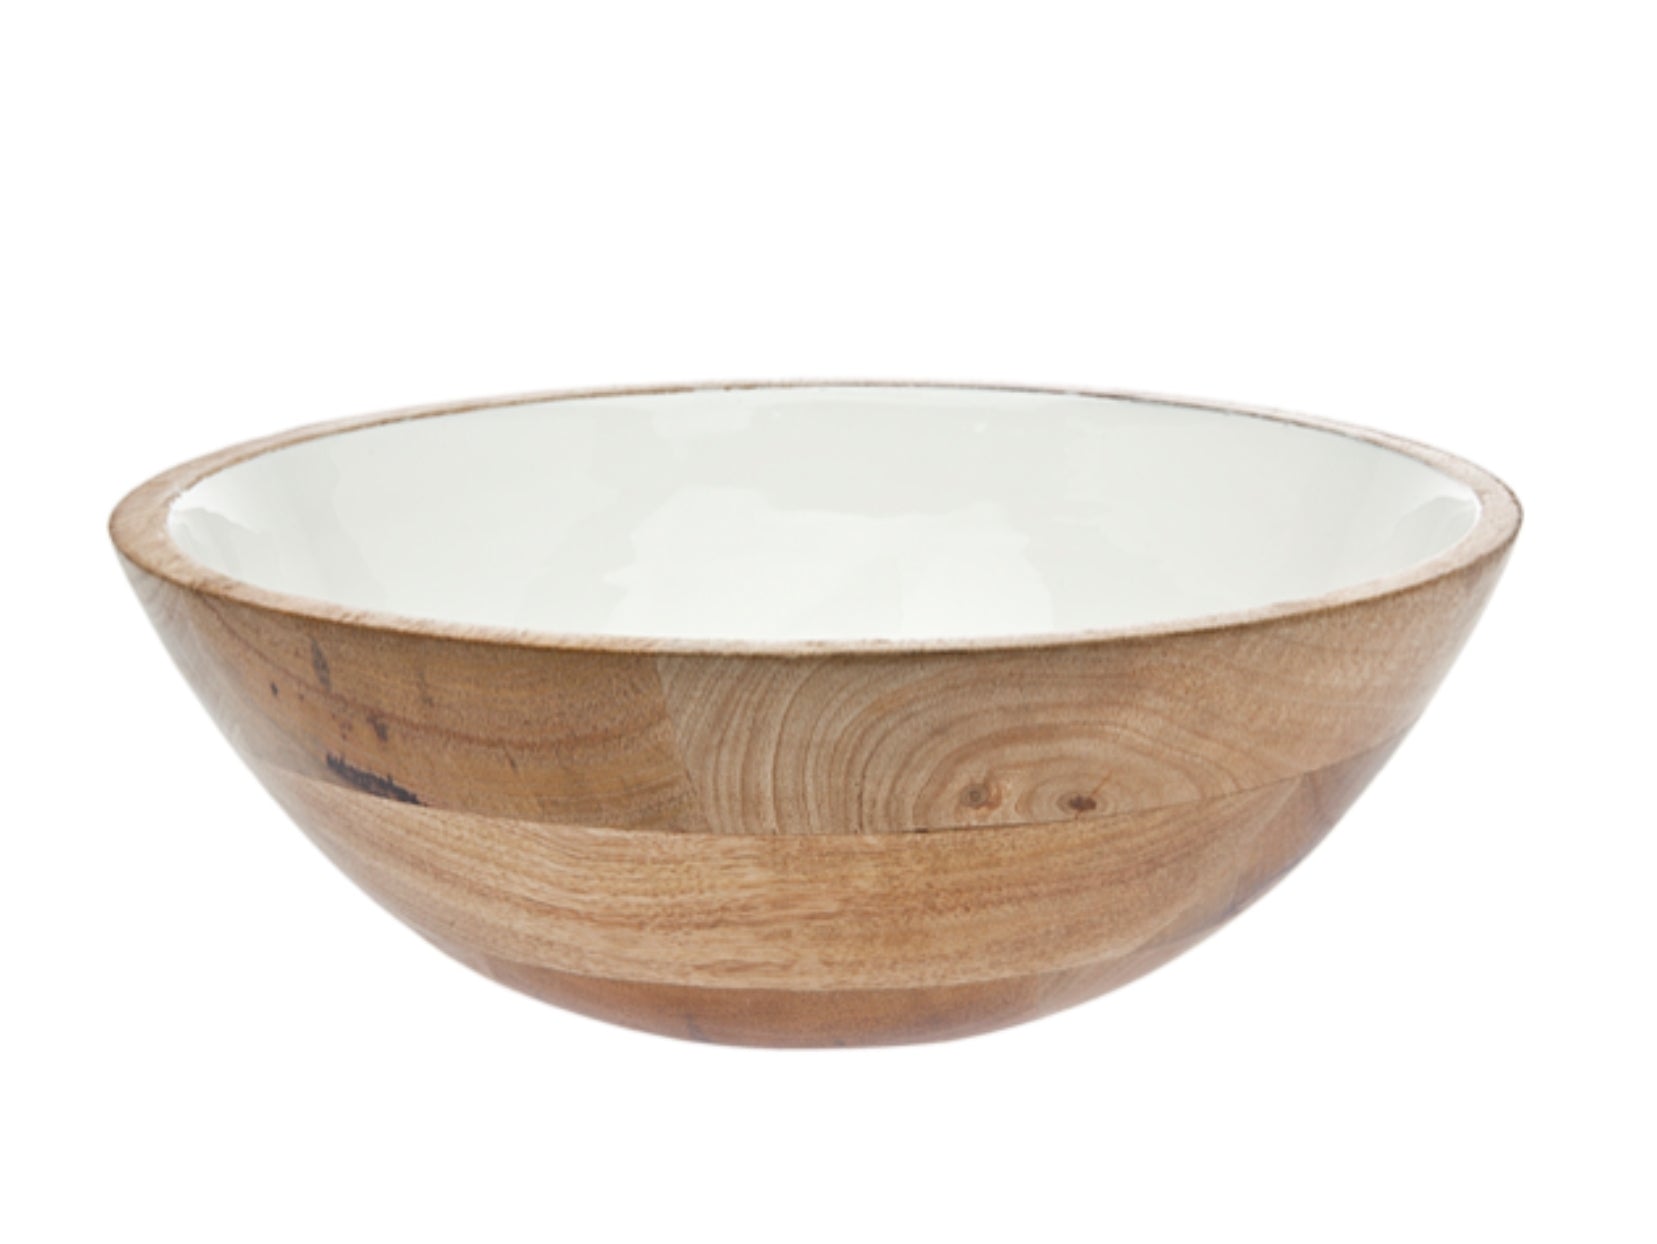 Serving Bowl - White / Wood